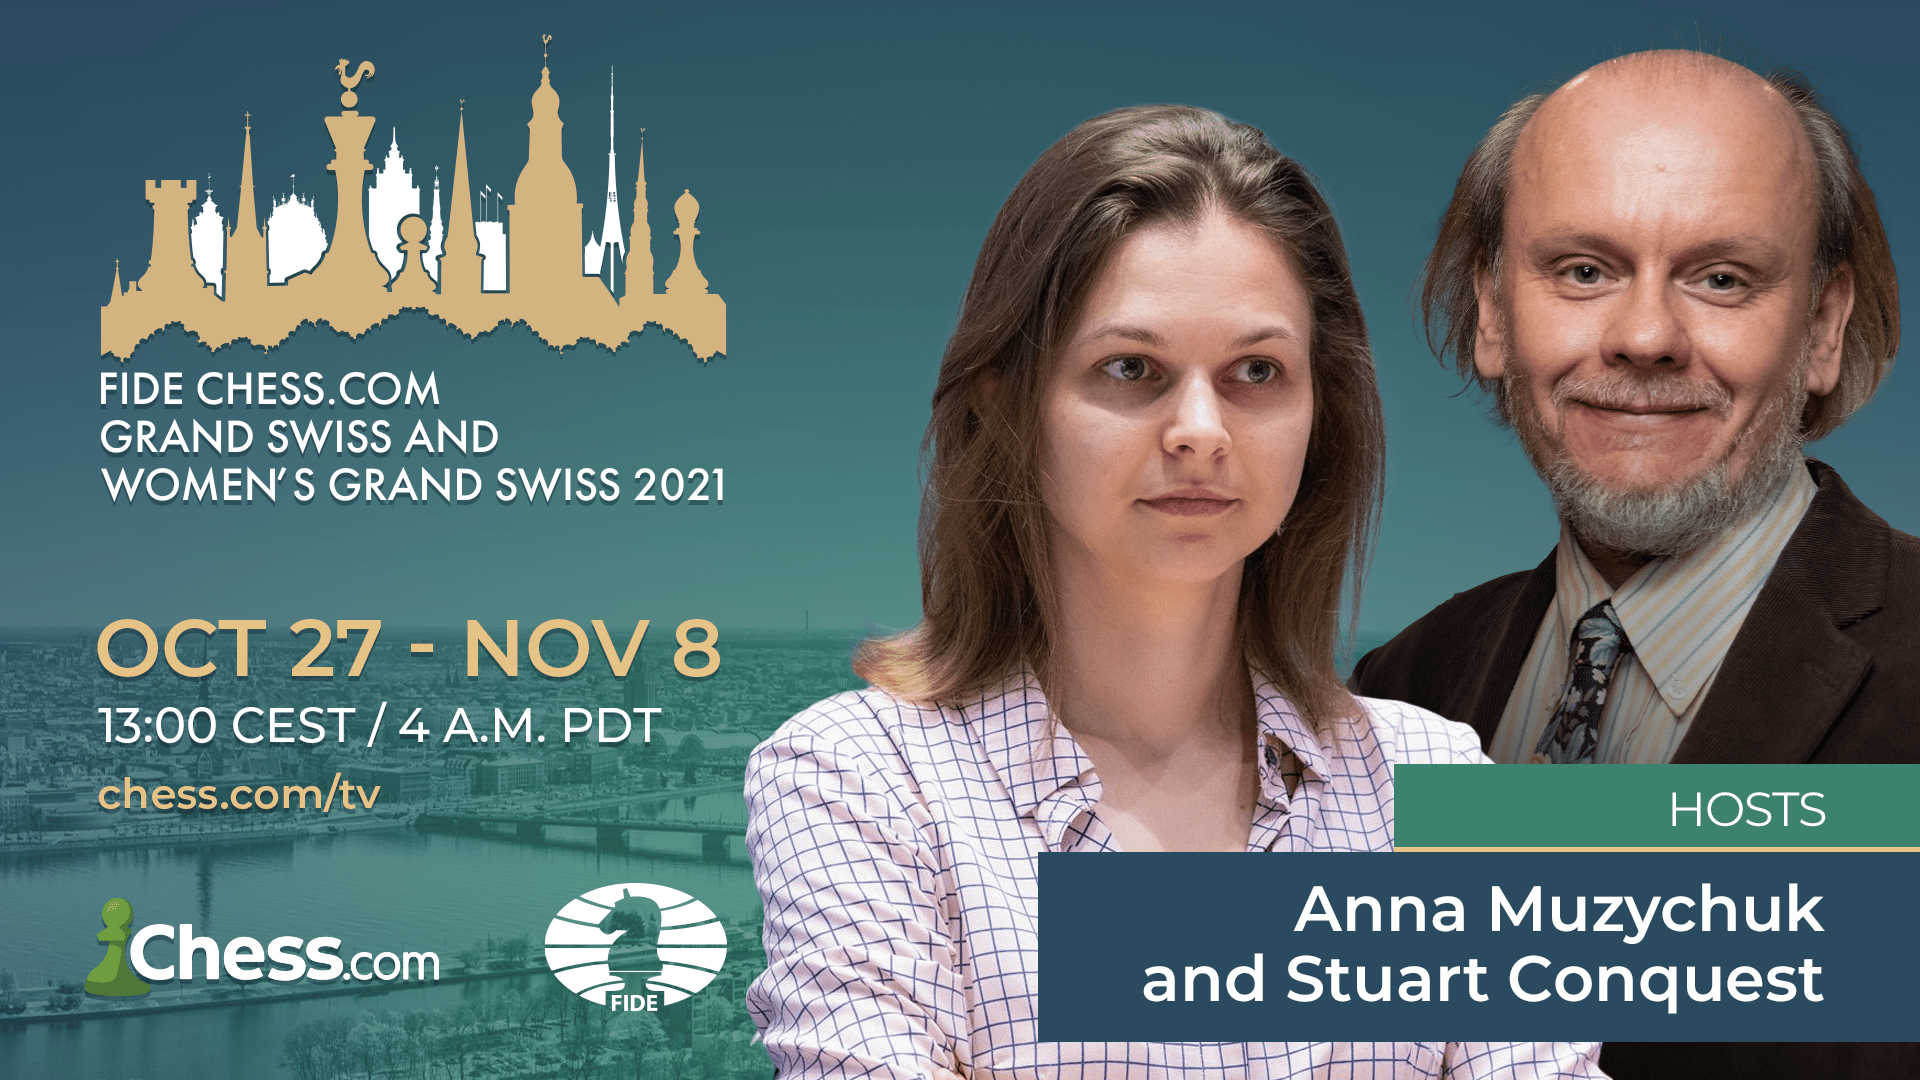 Polymarket  FIDE Grand Swiss: Who will win?